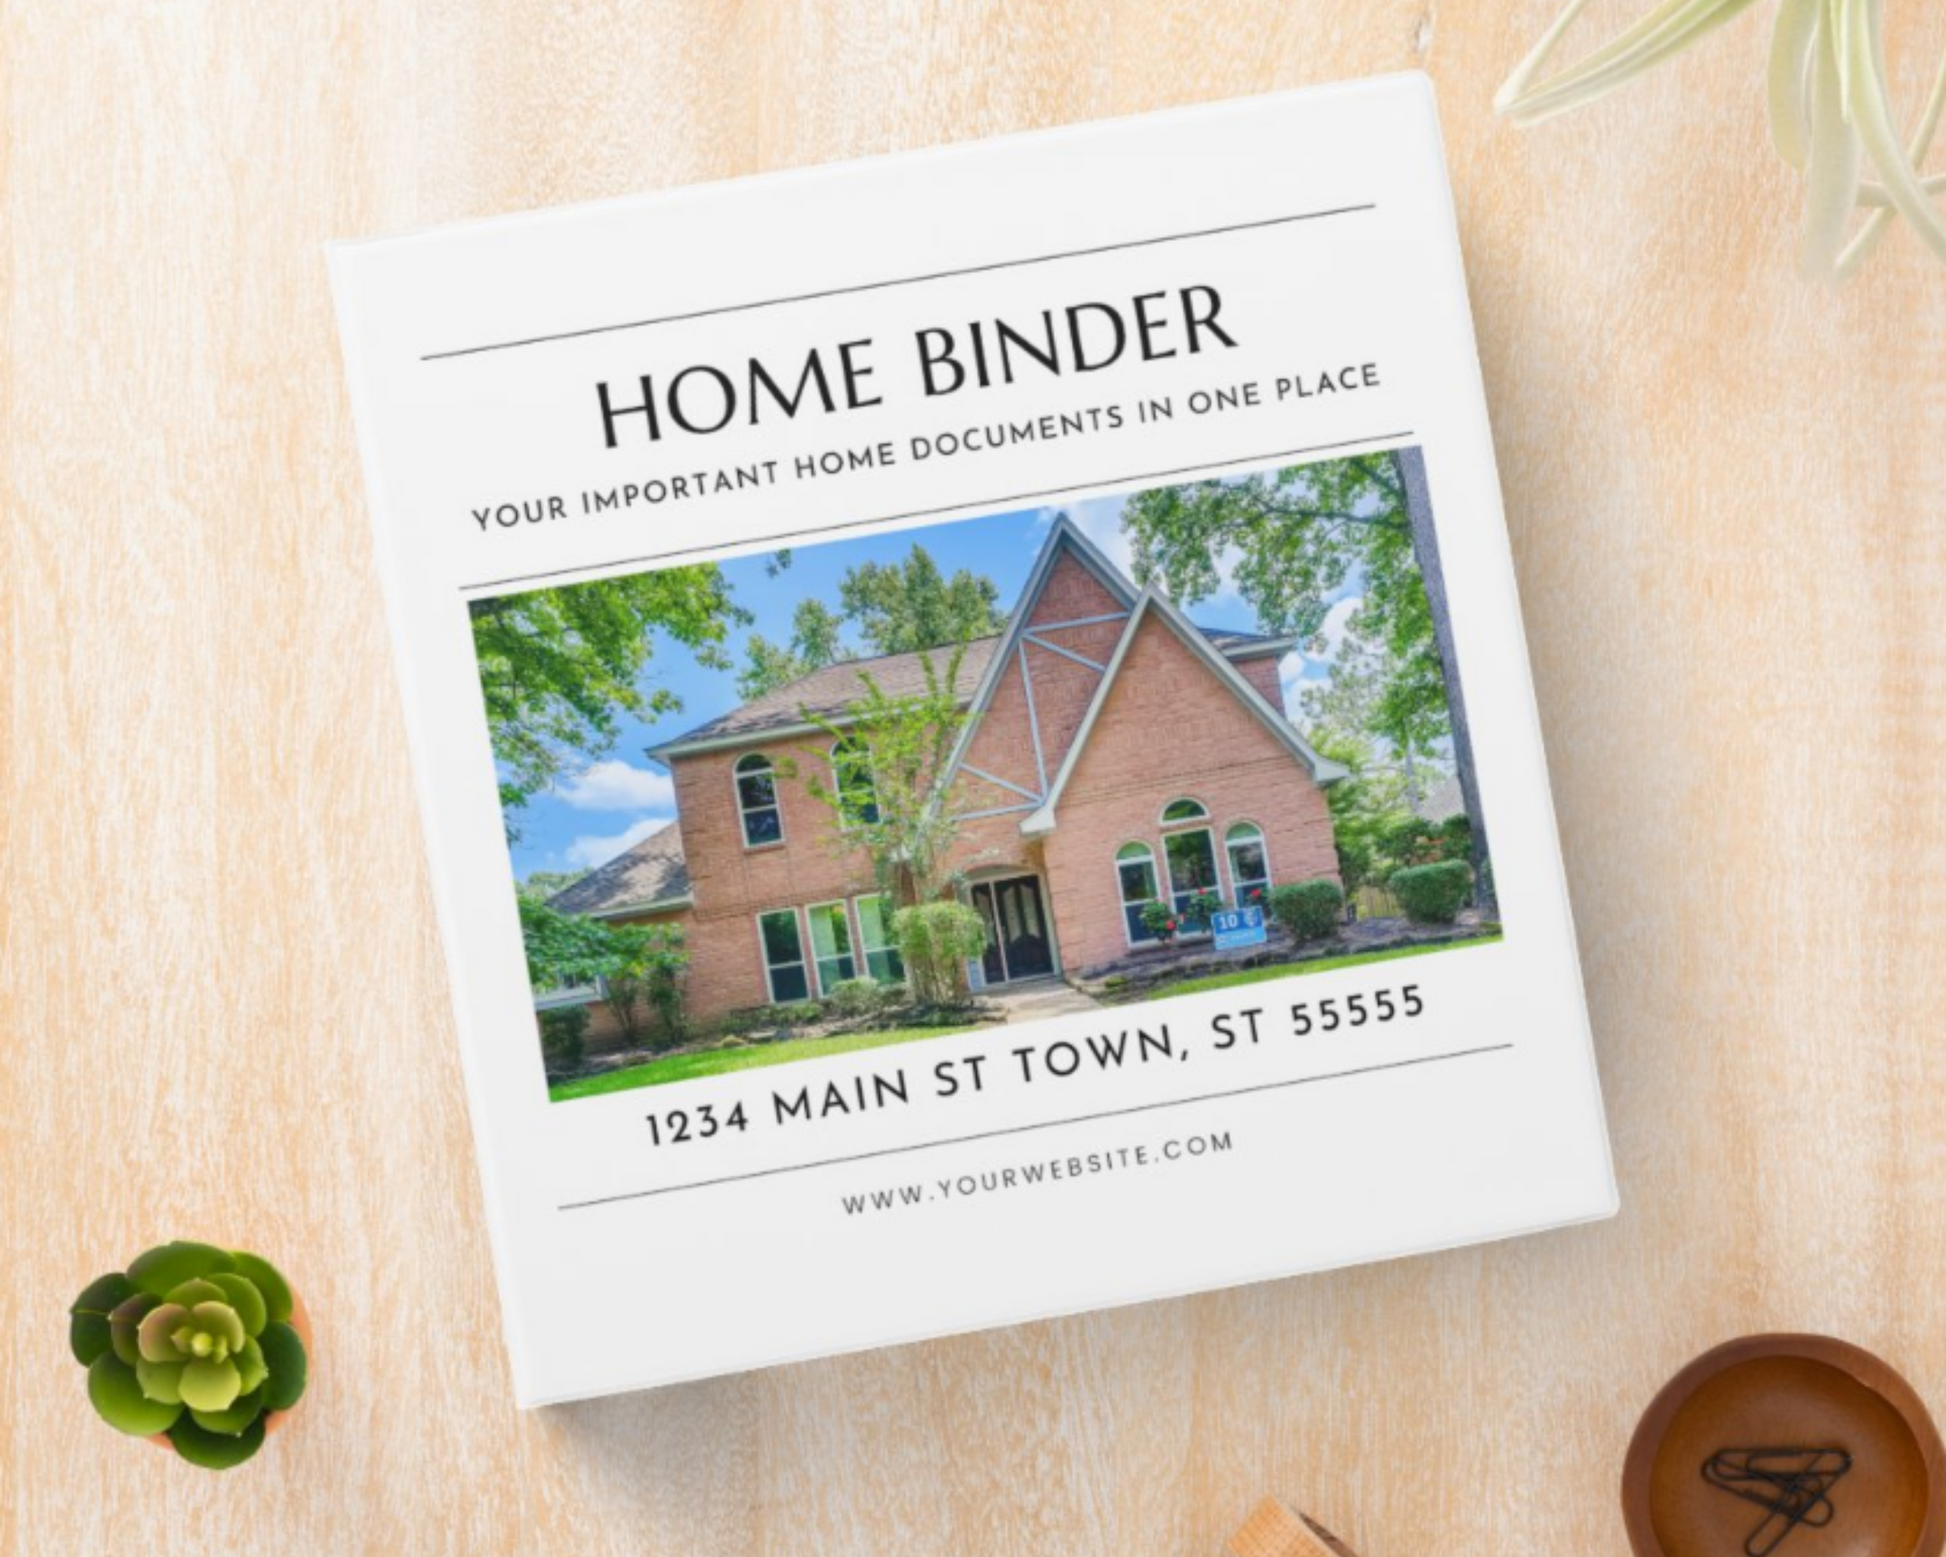 Real Estate Home Binder, Realtor Closing Gift, Real Estate Marketing, Closing Binder, House Binder, Home Buyer Guide, Realtor Flyer, Canva